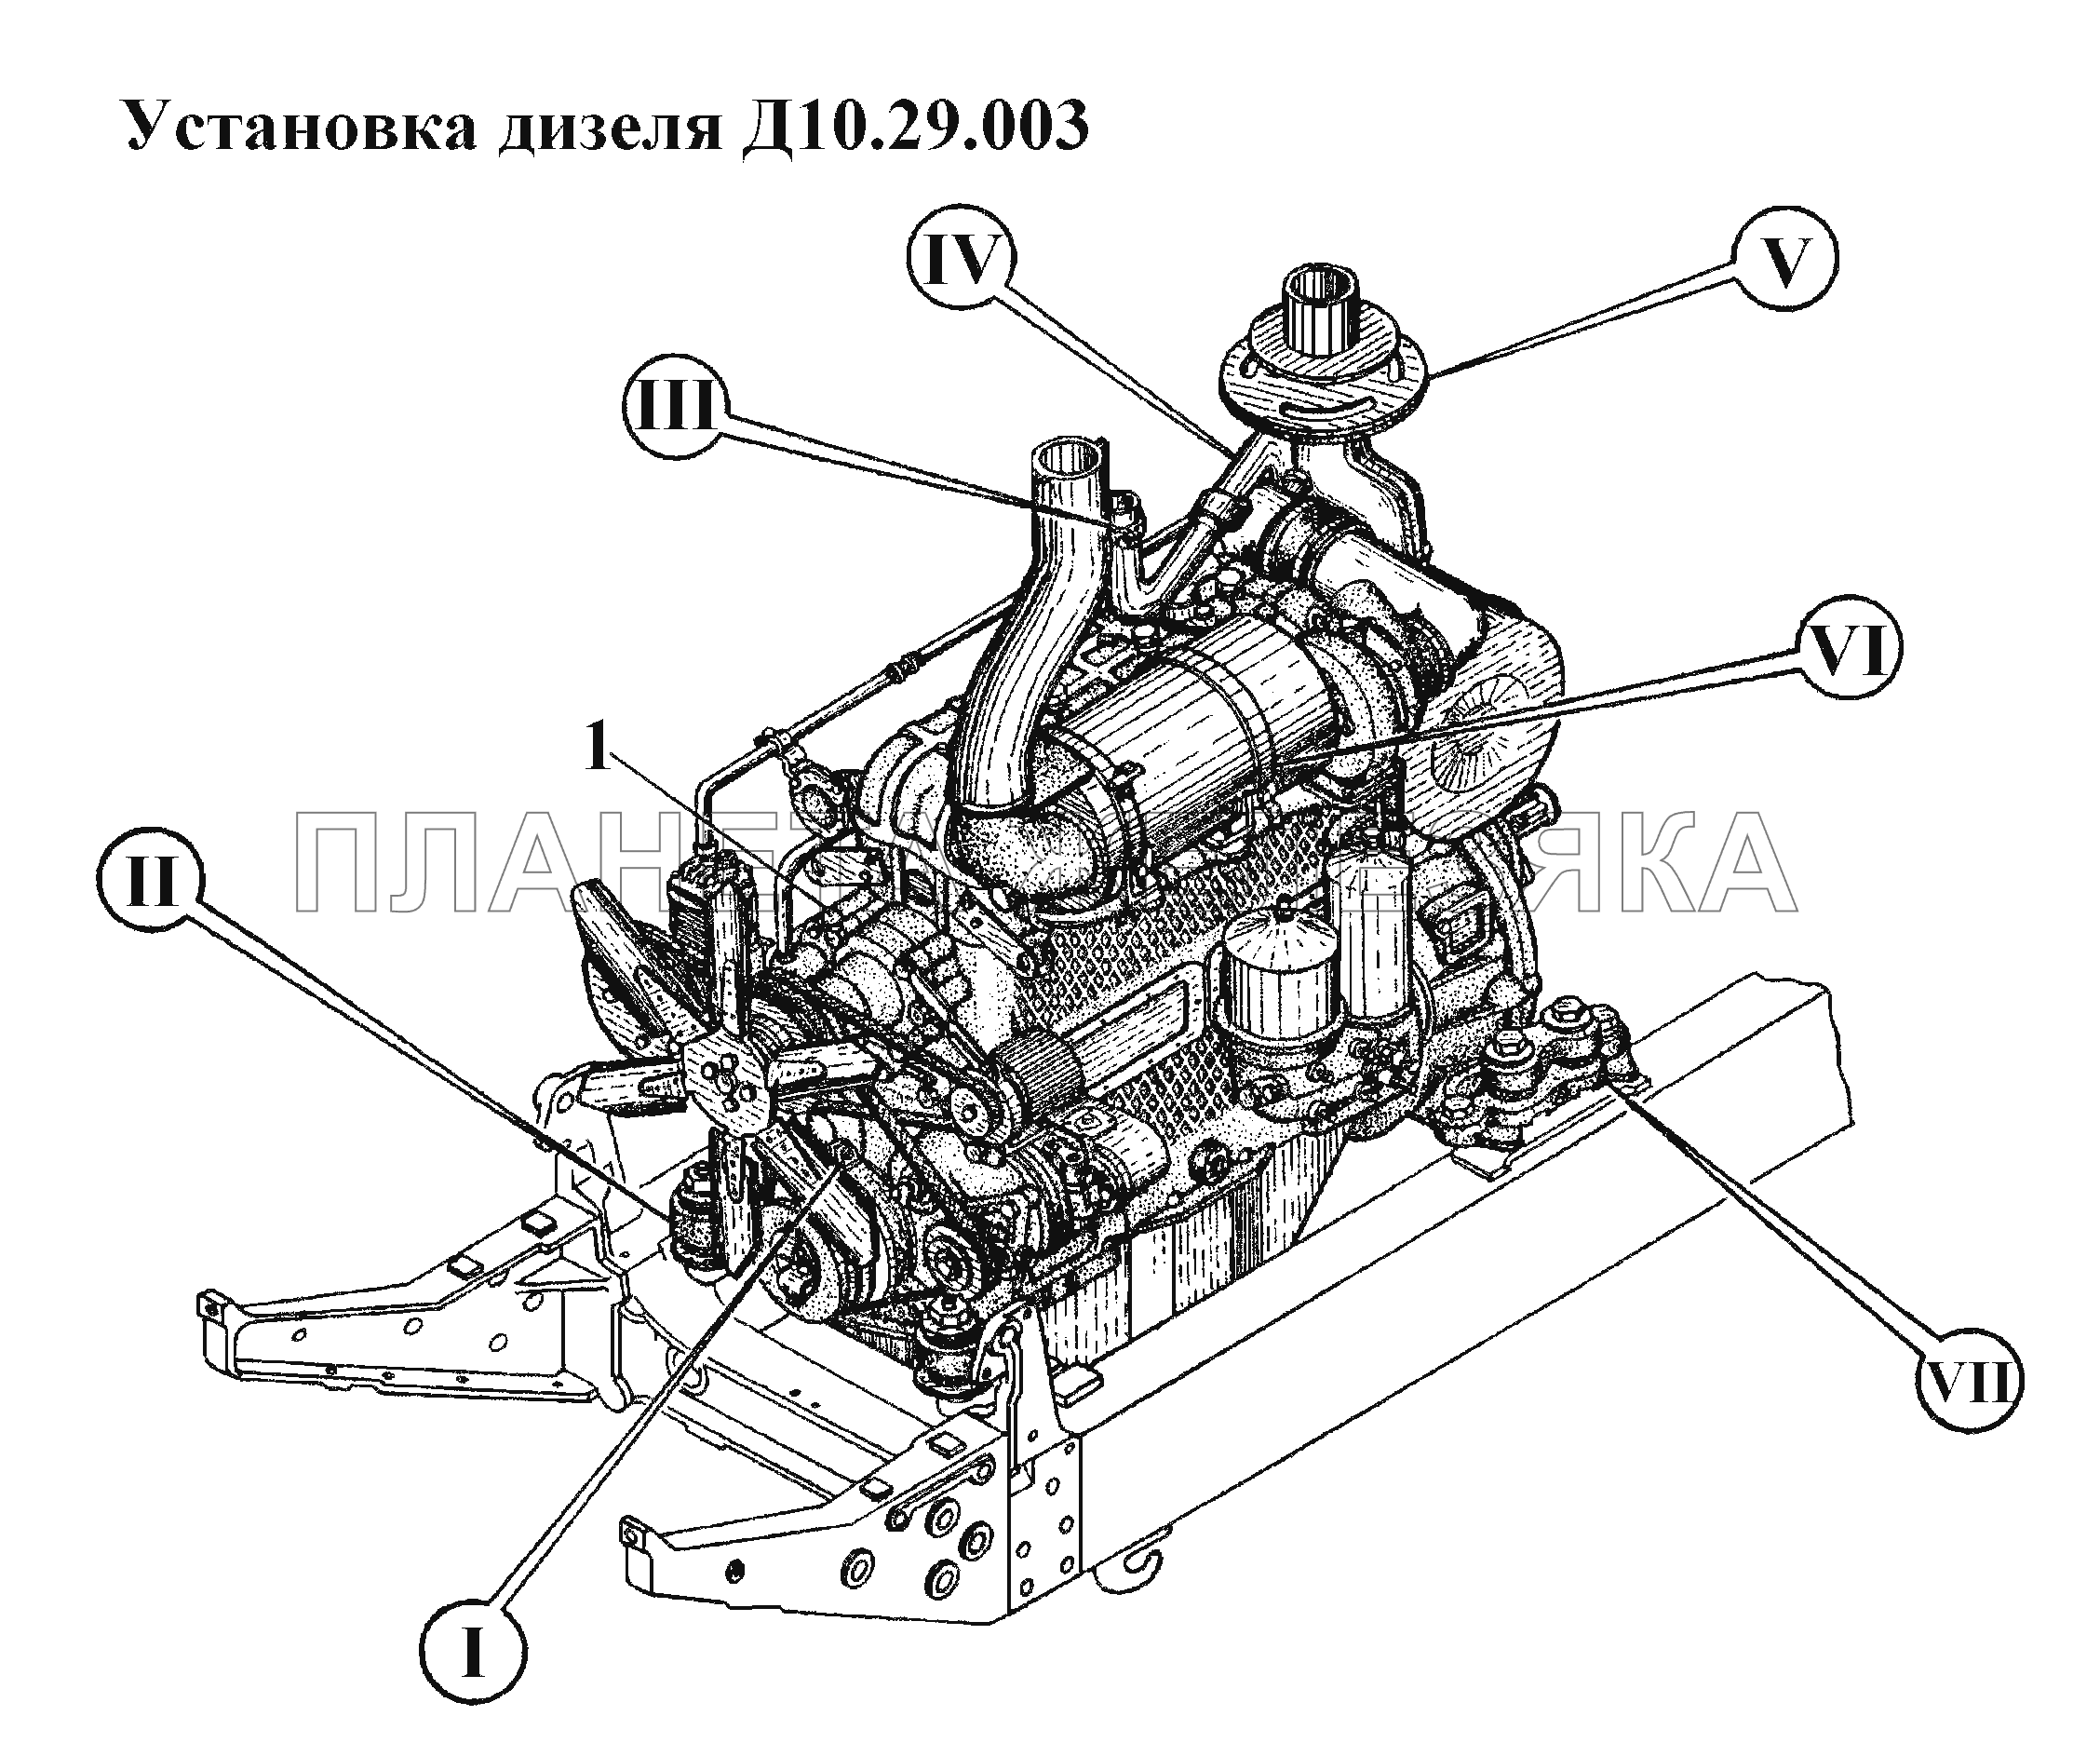 Установка дизеля Д10.29.003 (1) ВТ-100Д